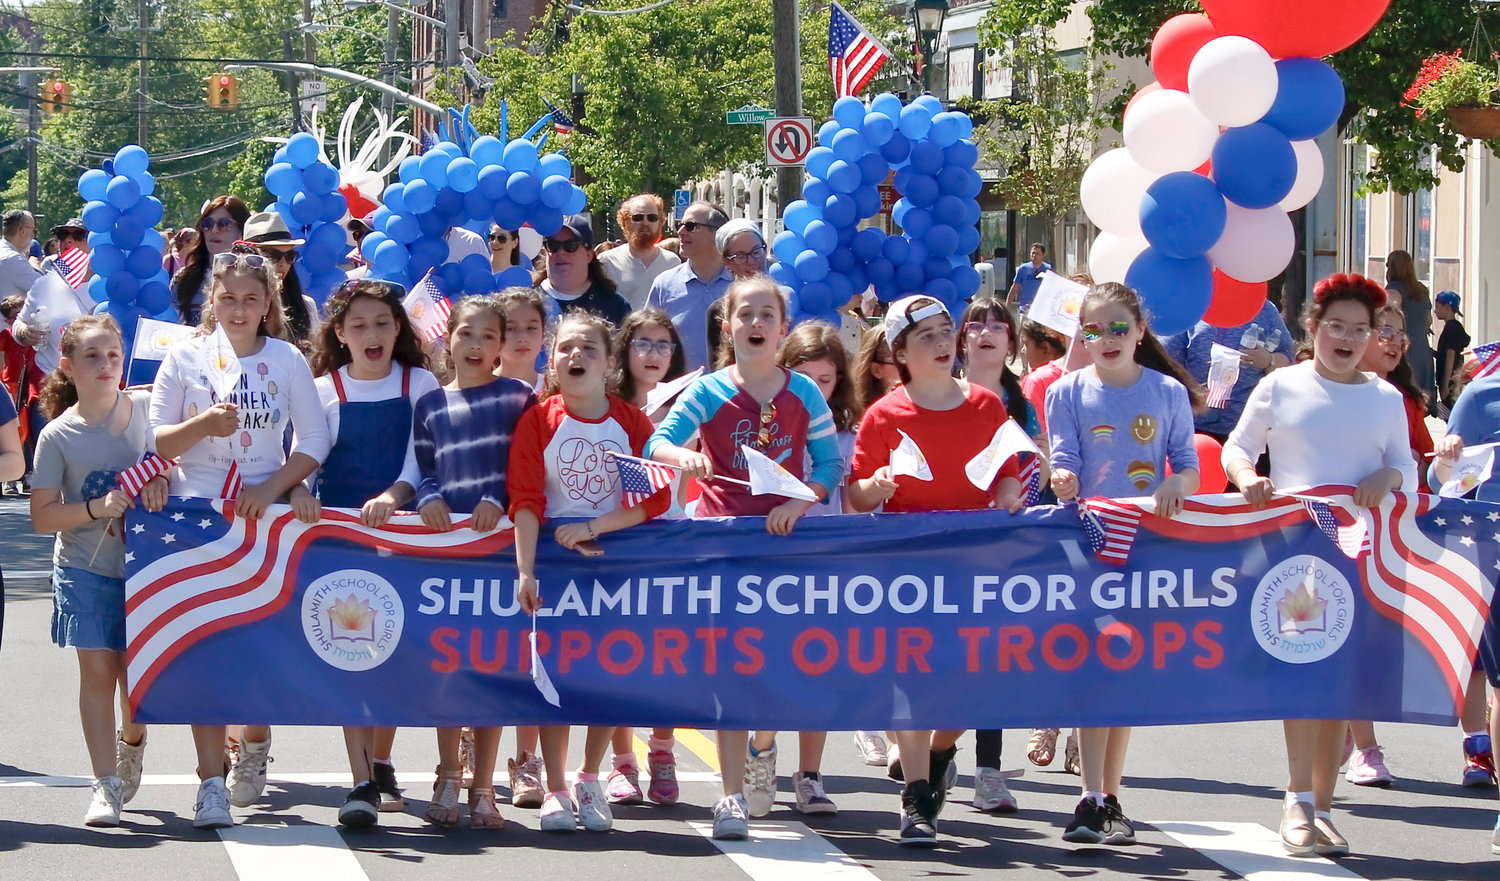 The Shulamith School for Girls in Cedarhurst joined the Lawrence-Cedarhurst Memorial Day Parade on Sunday.